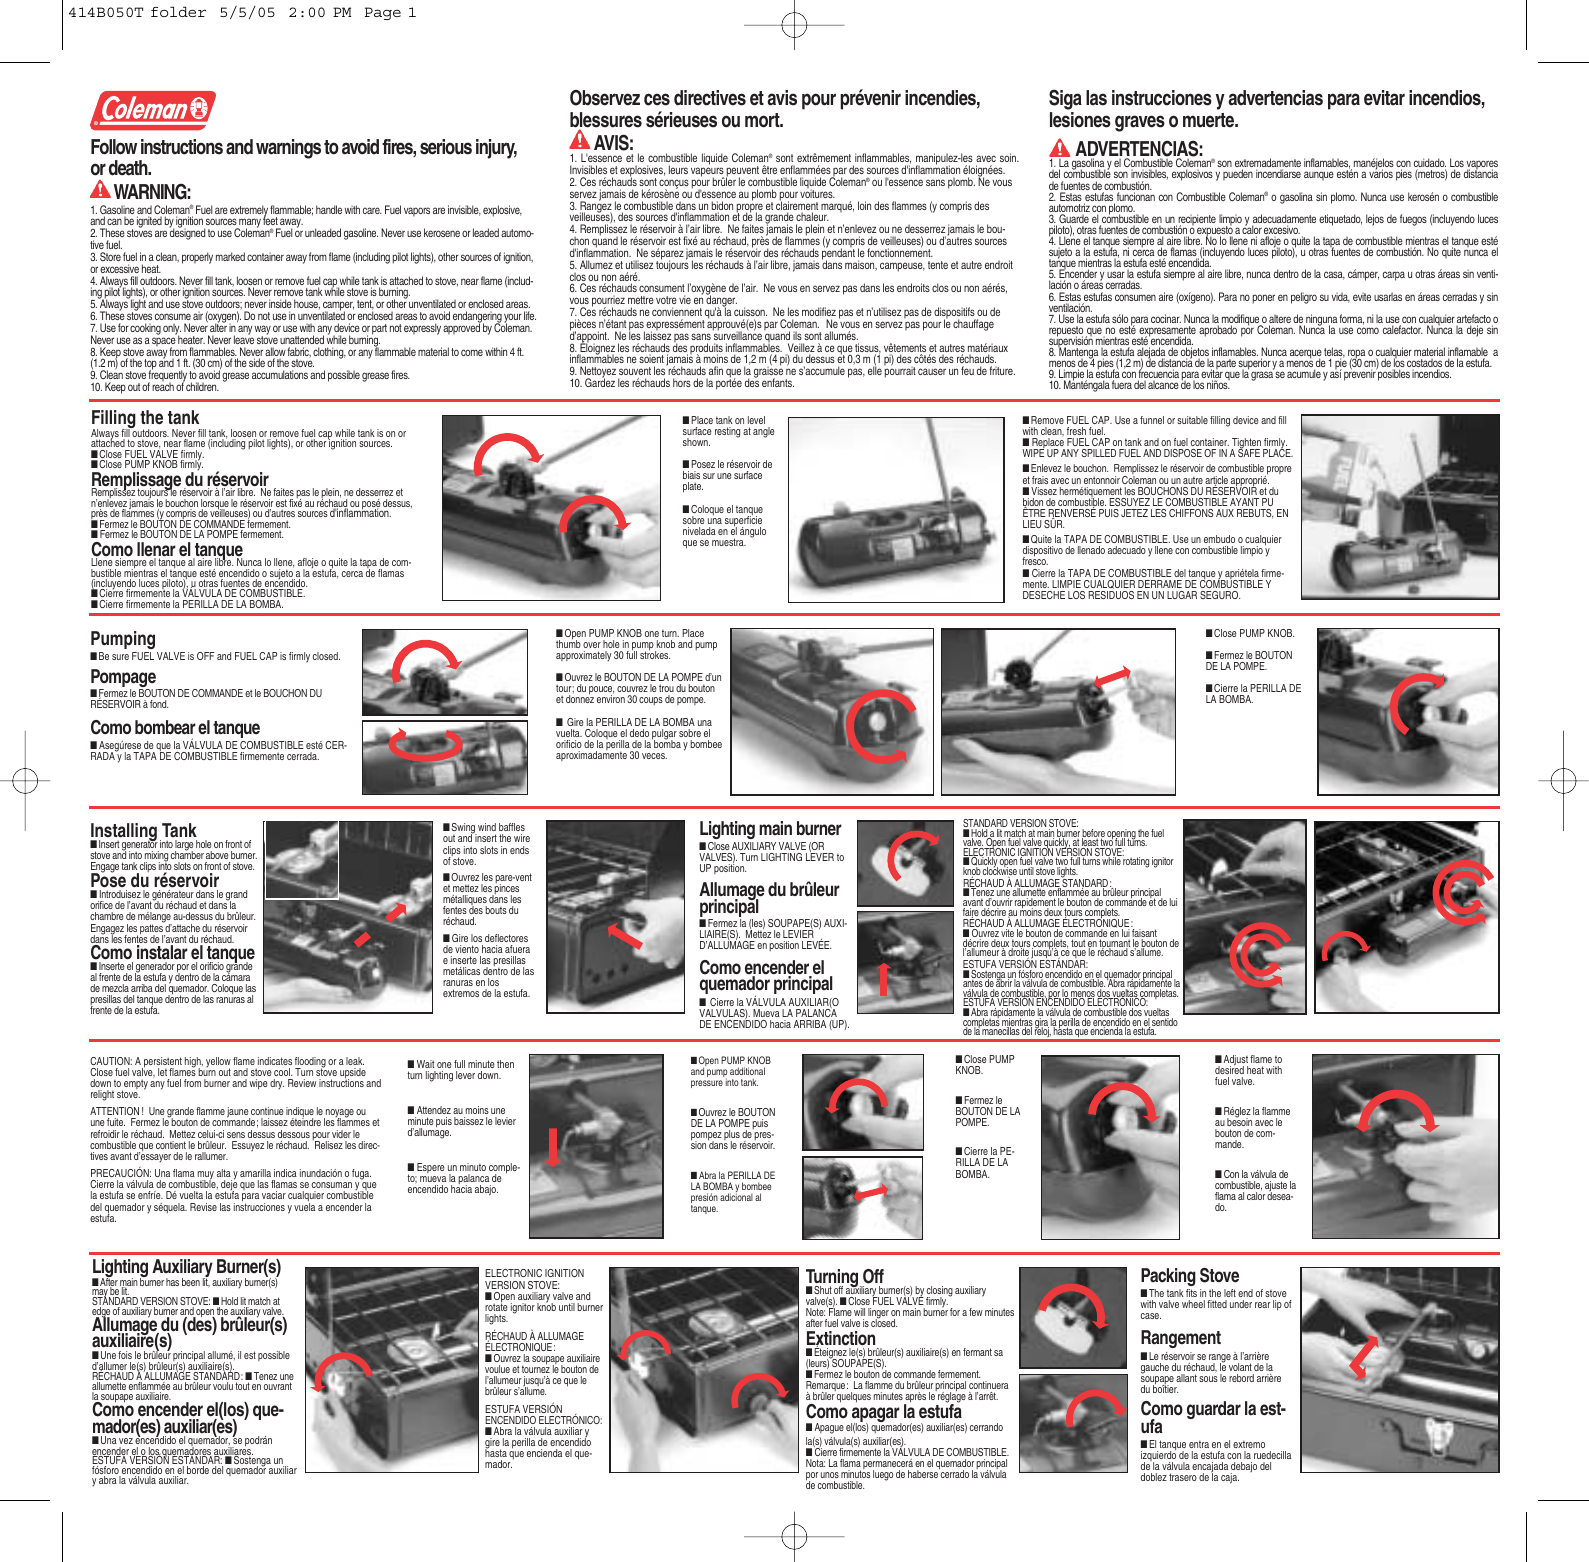 Coleman dual fuel stove 424 manual